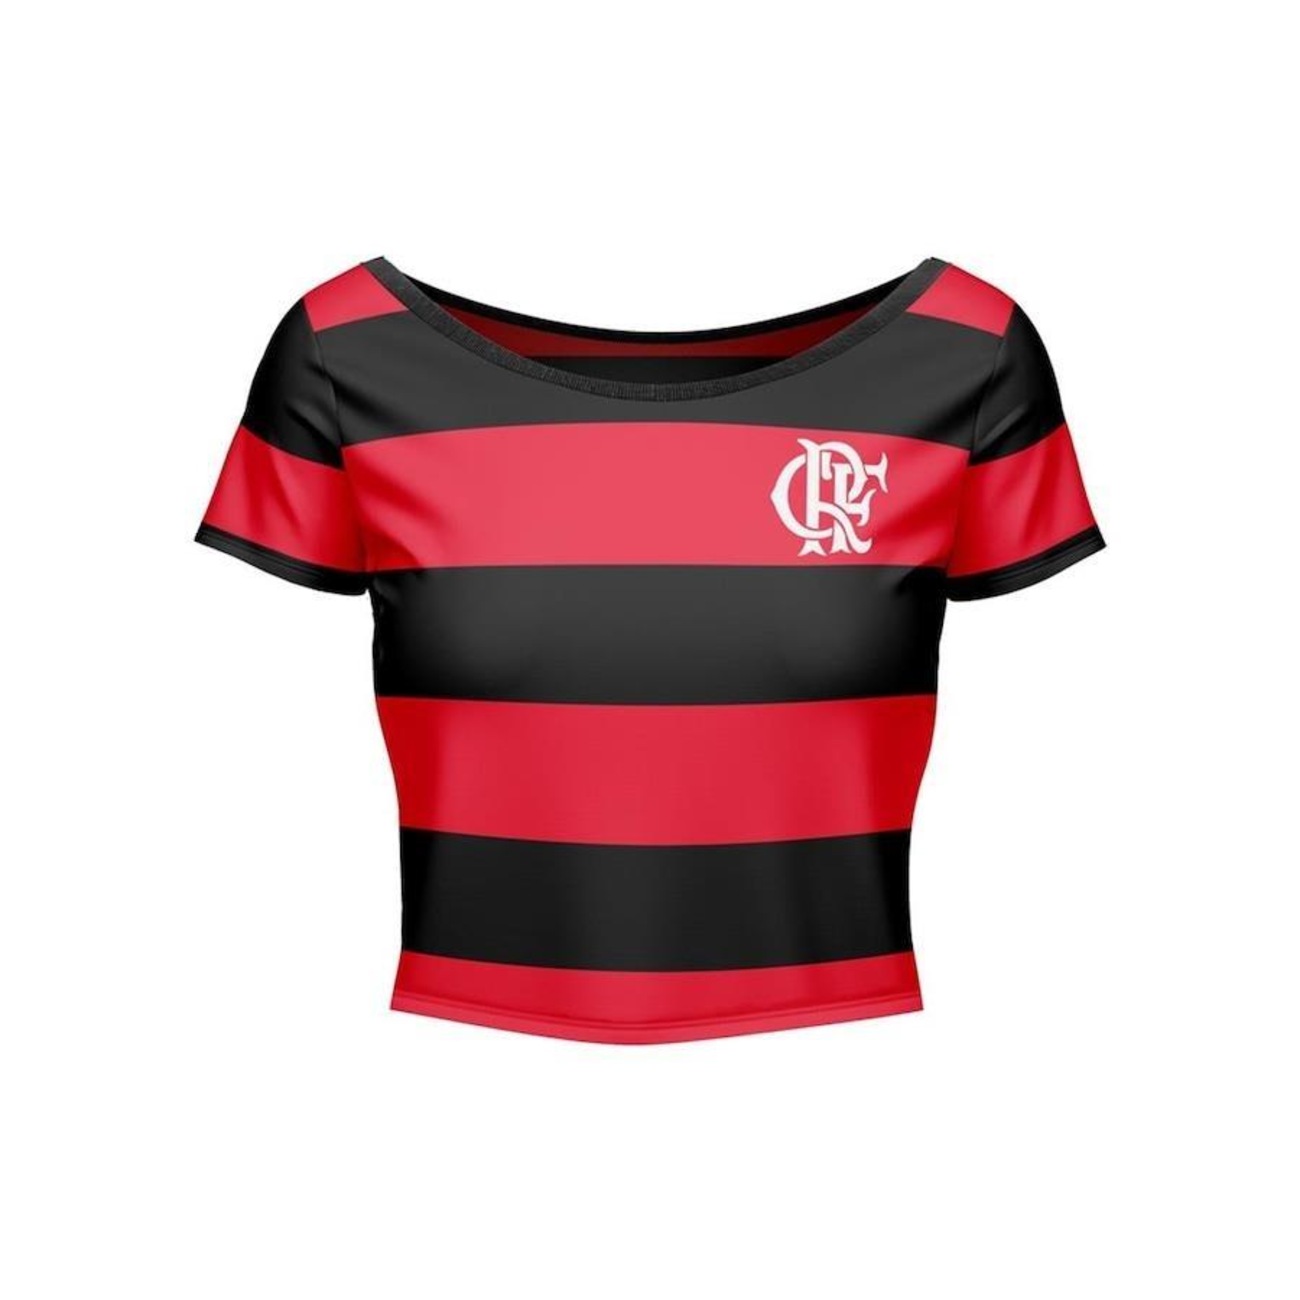 Kit Flamengo Casal Oficial - Confirm + Cropped Tamanho:M